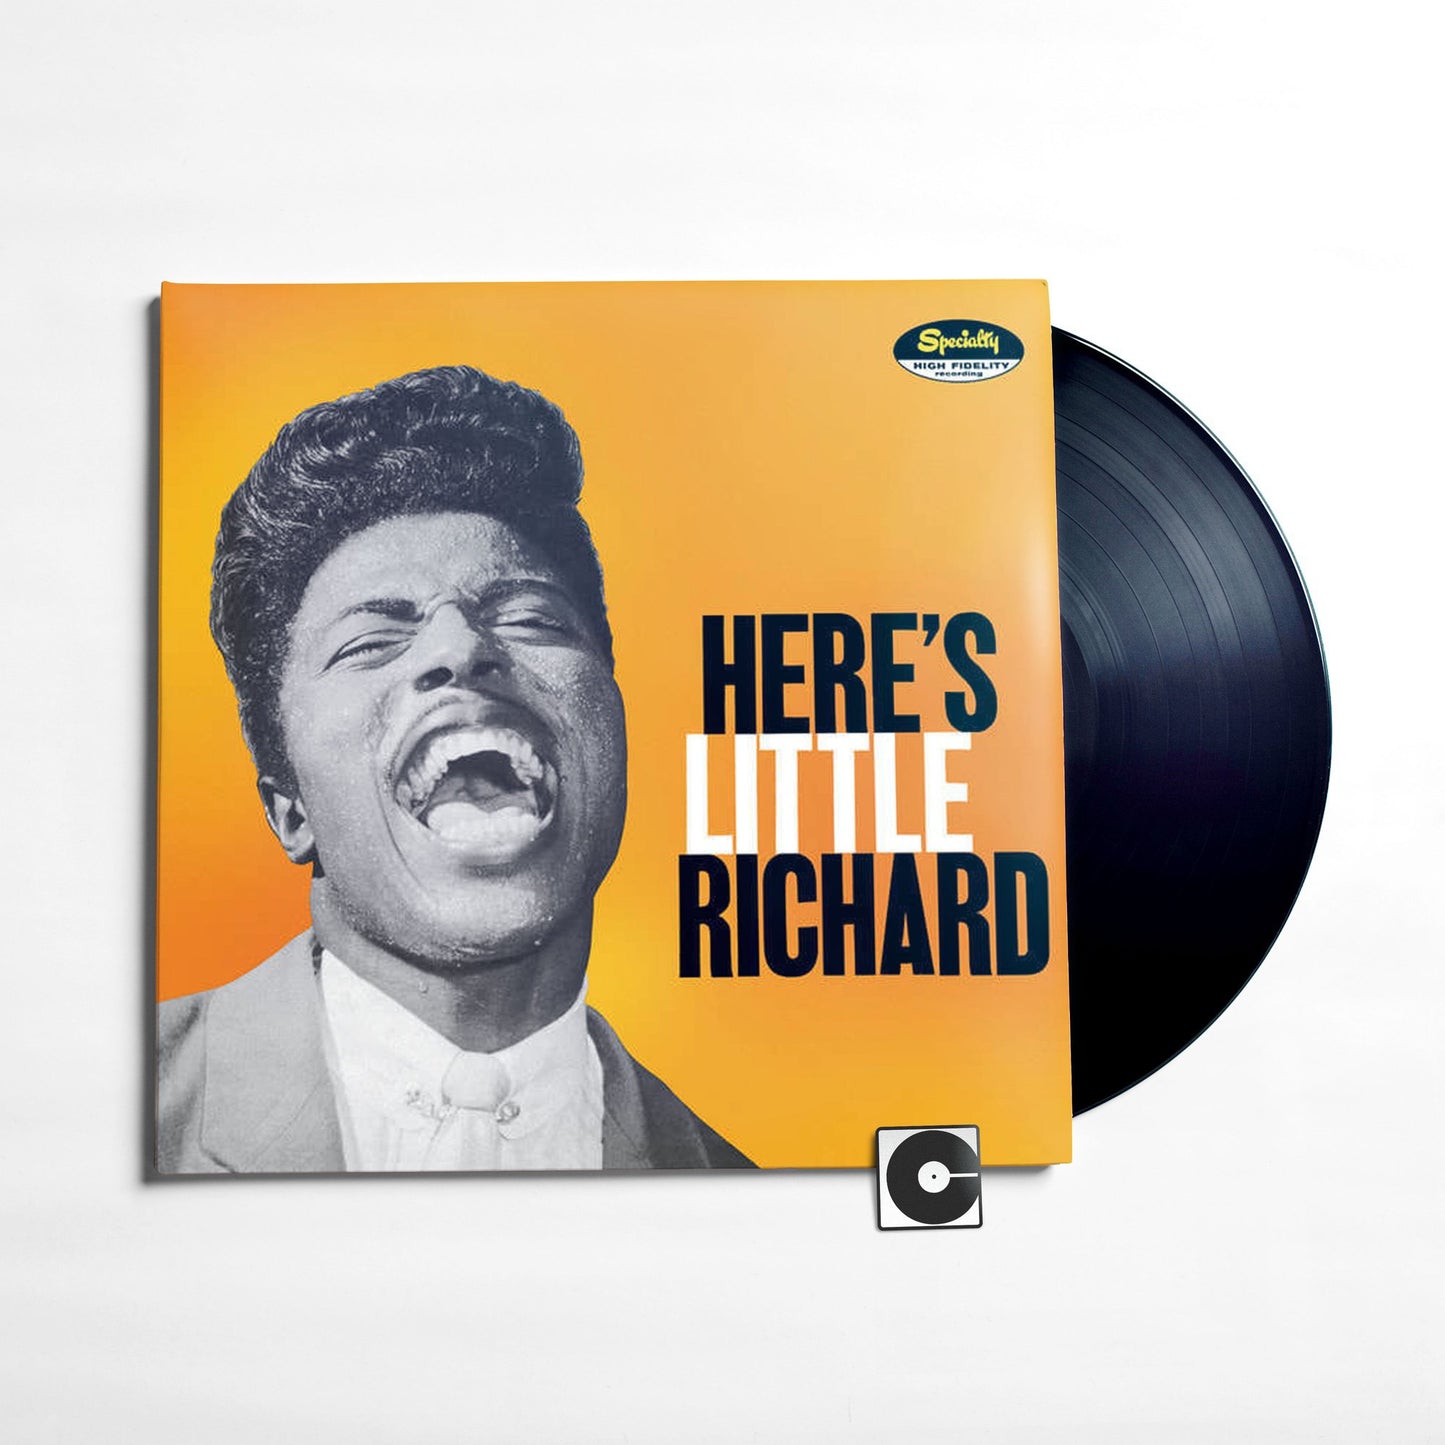 Little Richard - "Here's Little Richard"